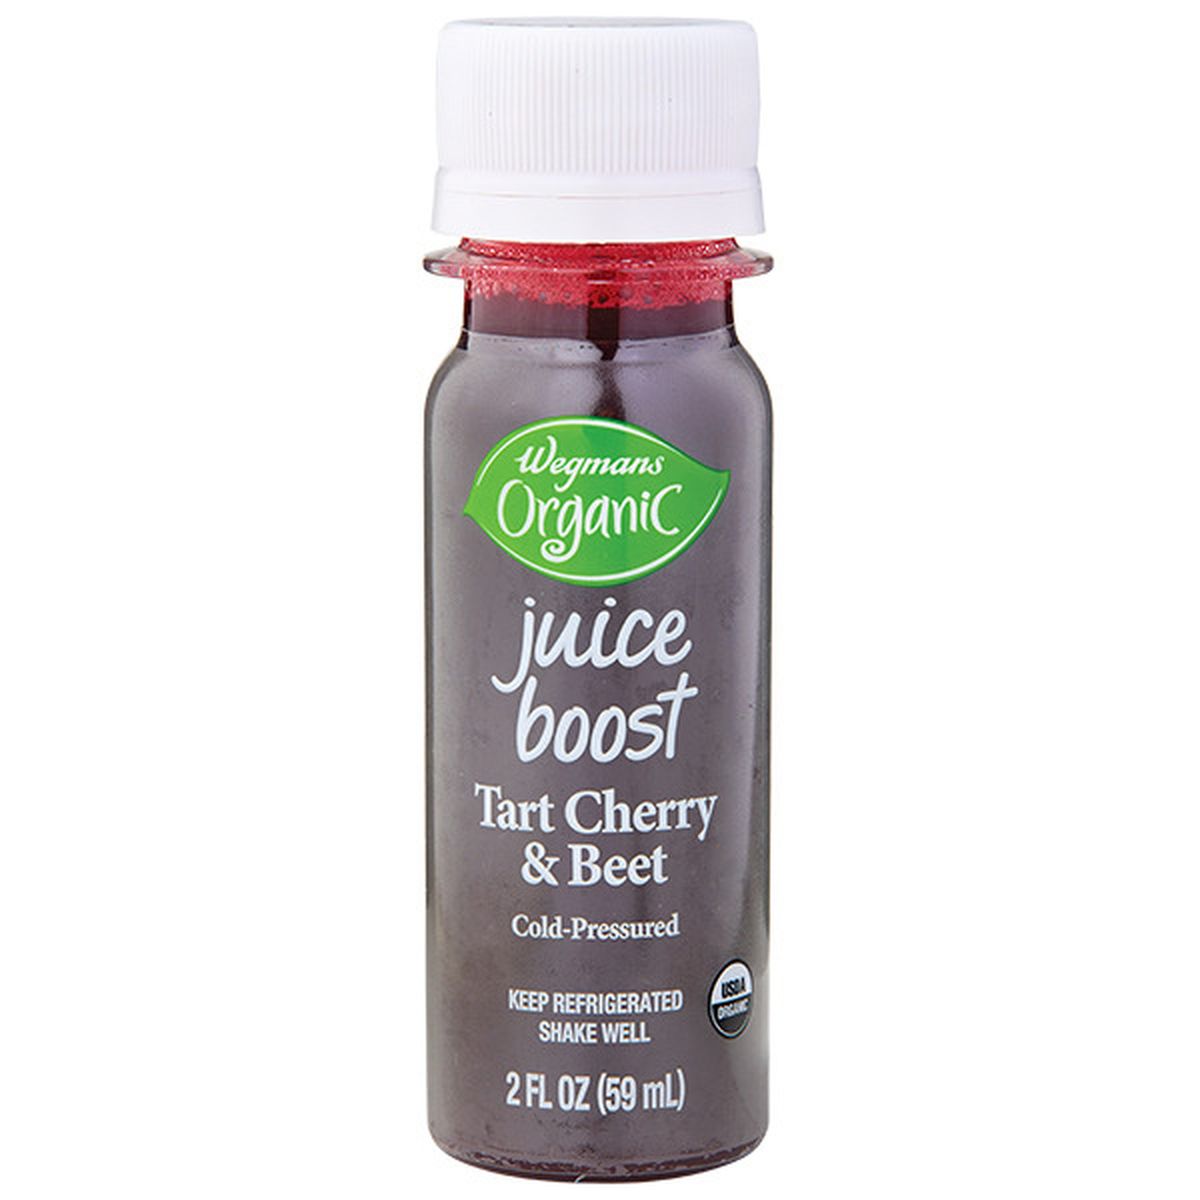 Calories in Wegmans Organic Tart Cherry & Beet Juice Boost